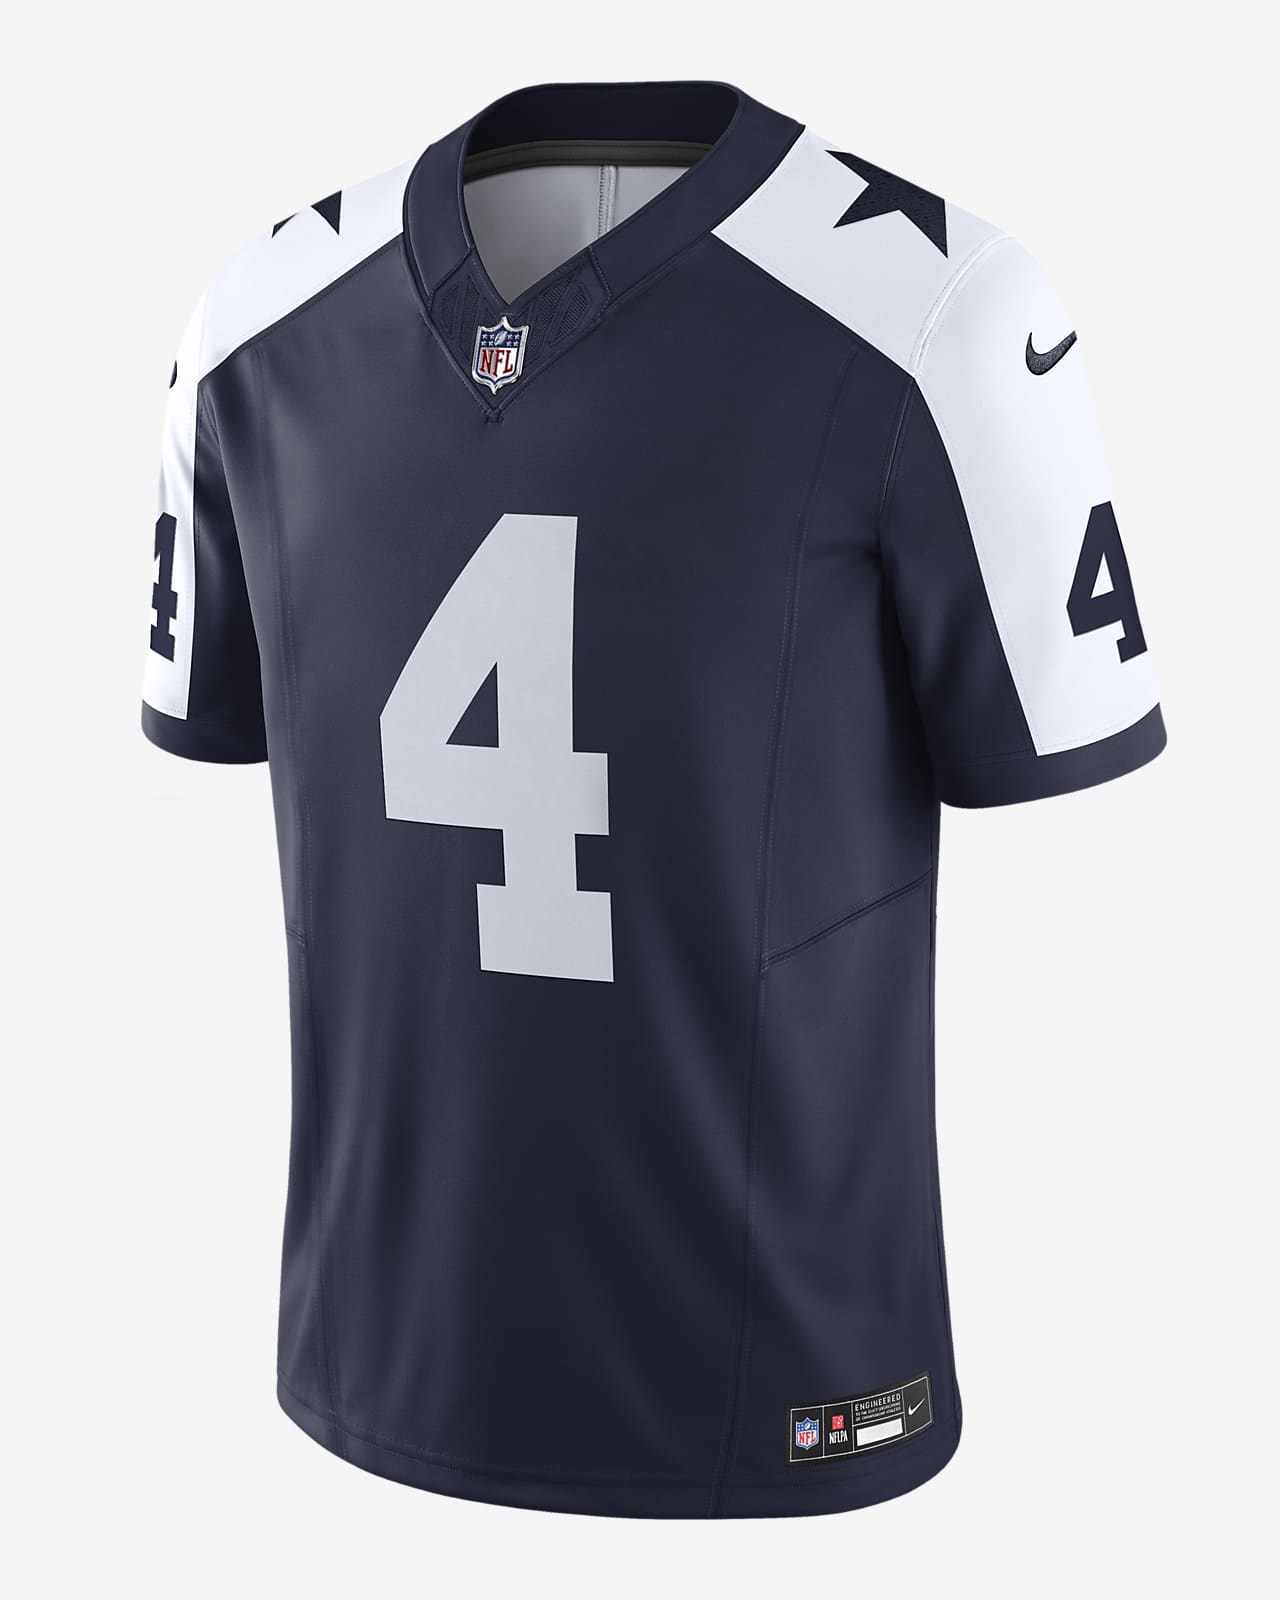 Dak Prescott Dallas Cowboys Men's Nike Dri-FIT NFL Limited Jersey